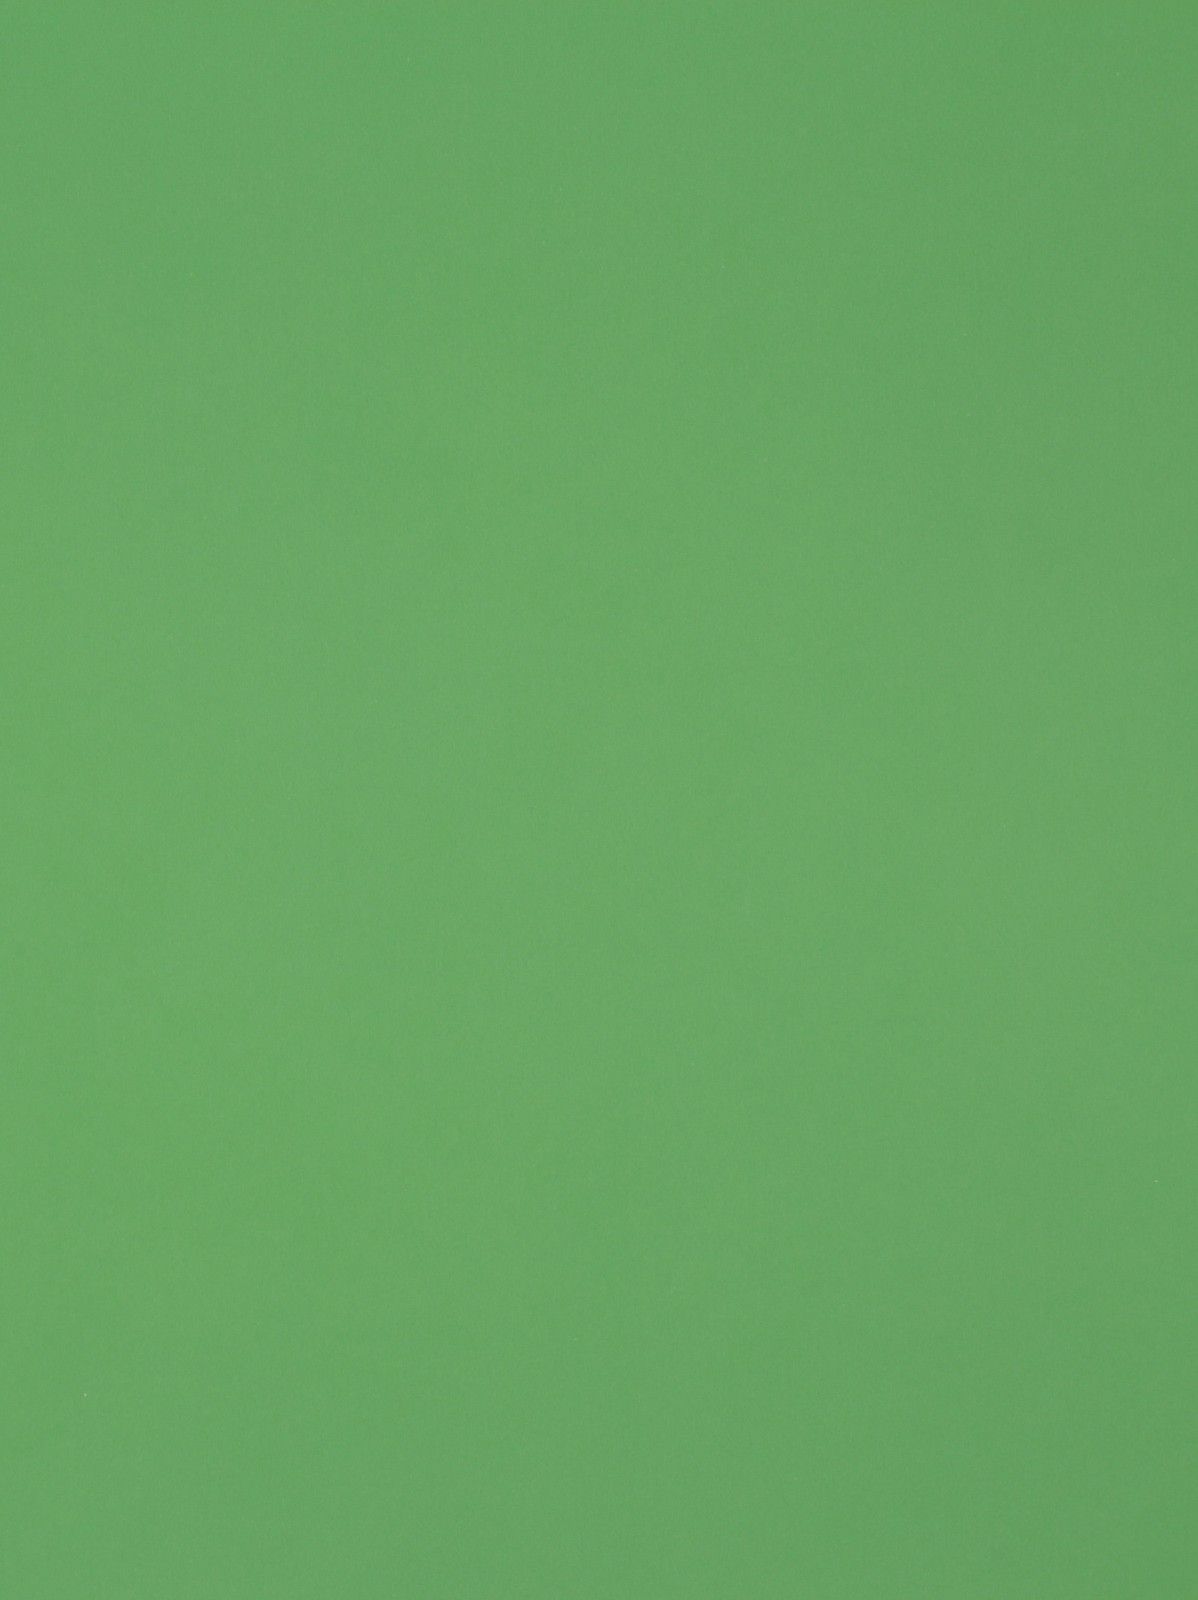 green wallpapers hd 4k (7)